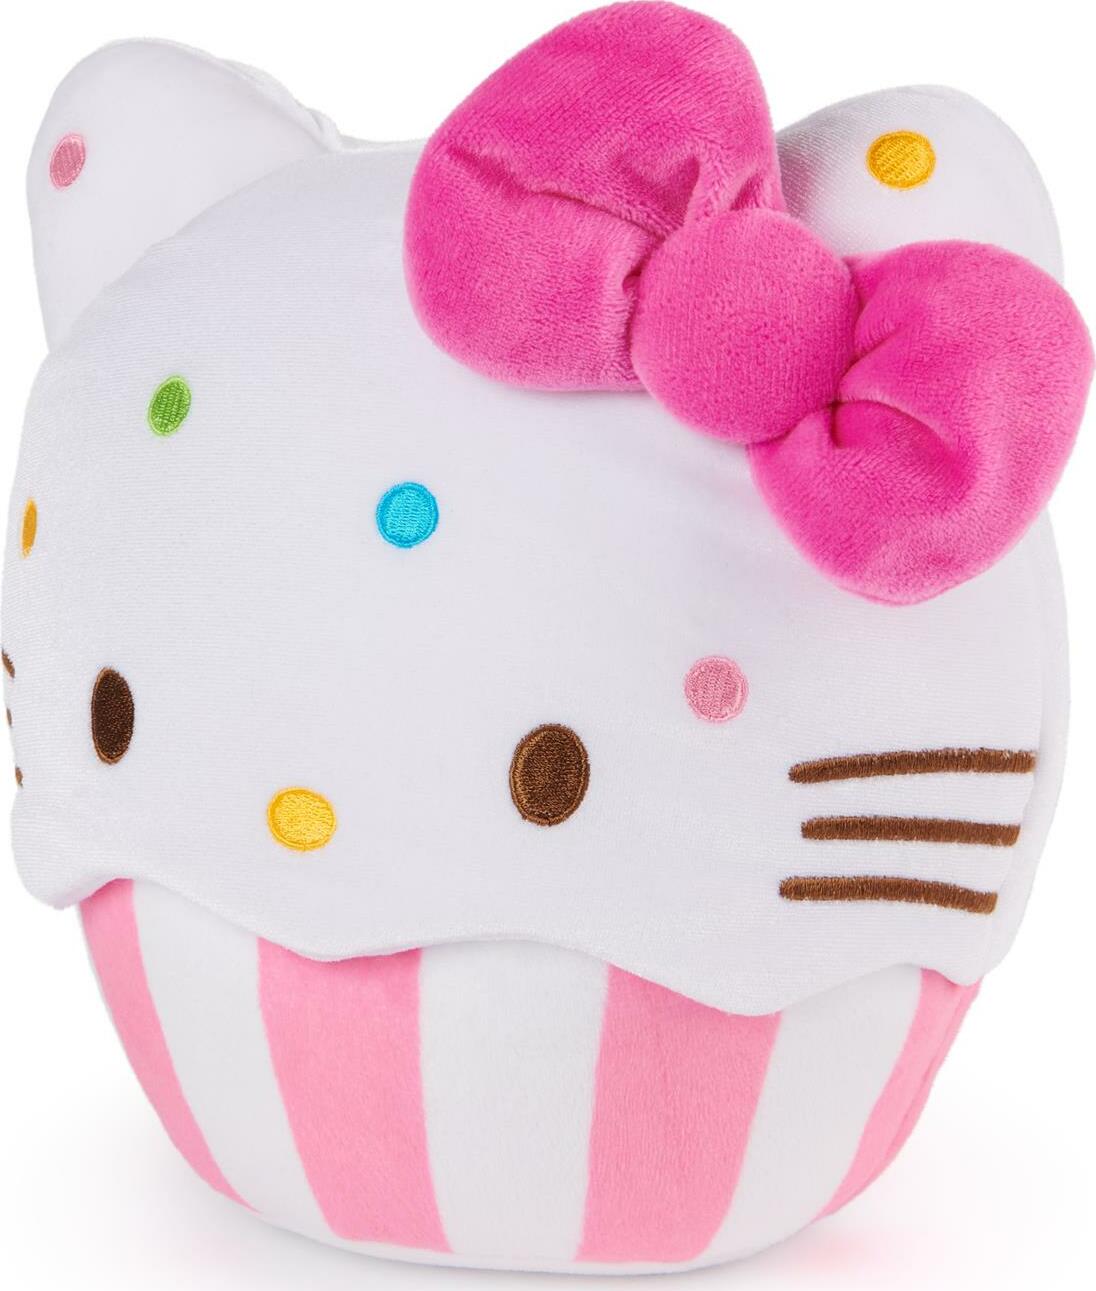 Hello Kitty Cupcake - 8 in